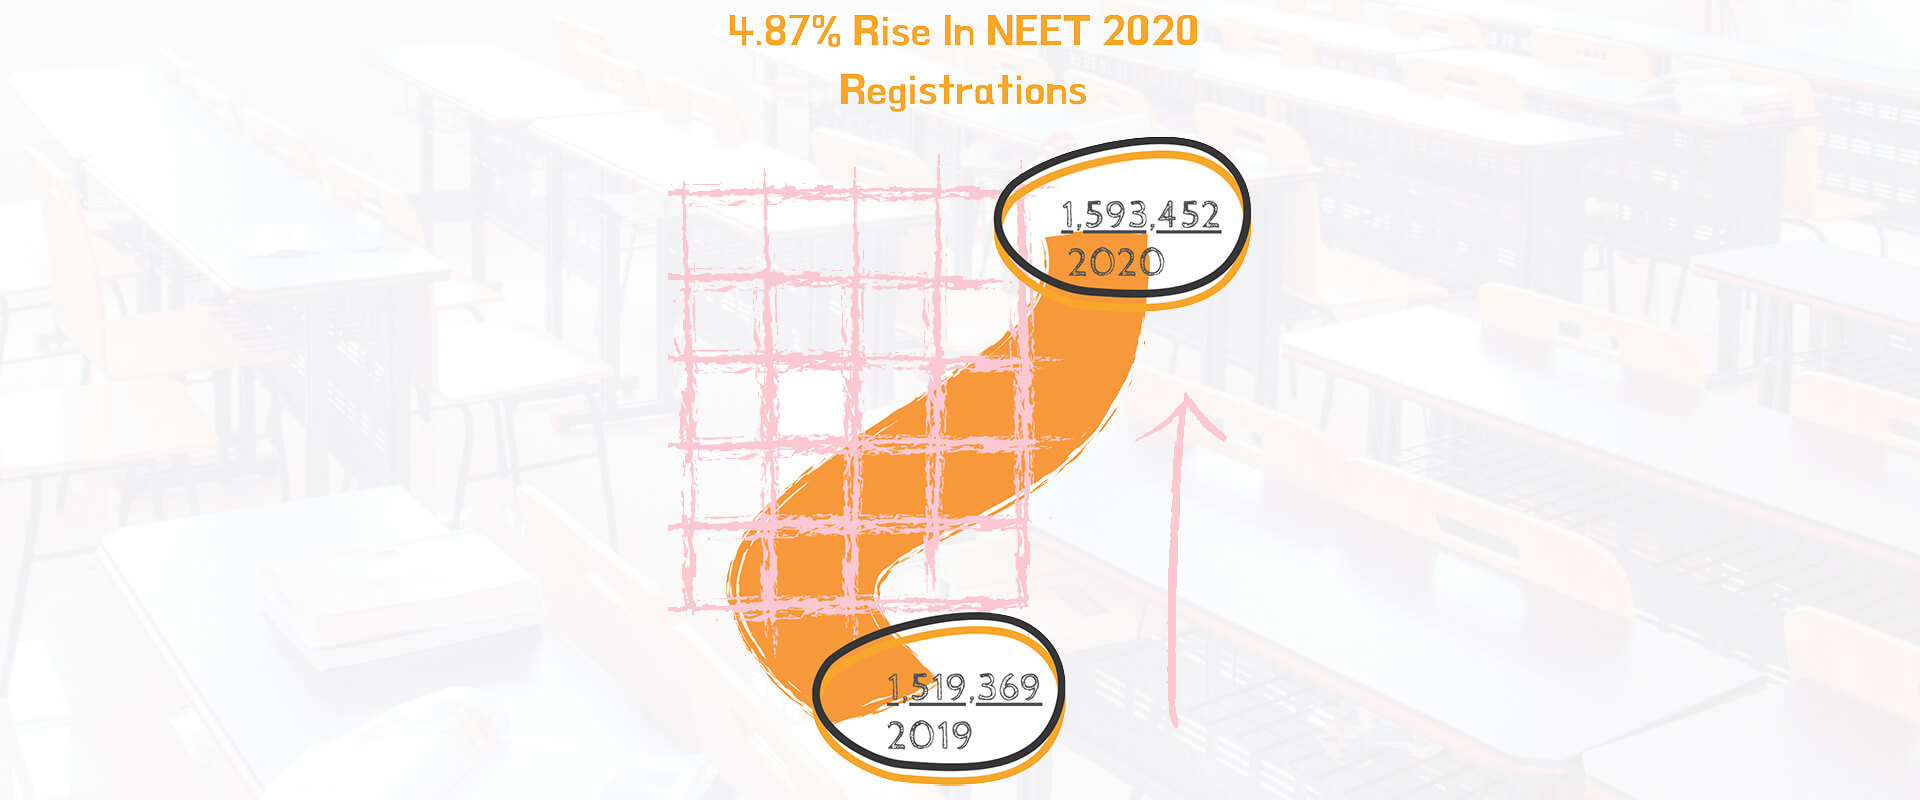 NEET 2020: Maharashtra Leads With Maximum Registrations